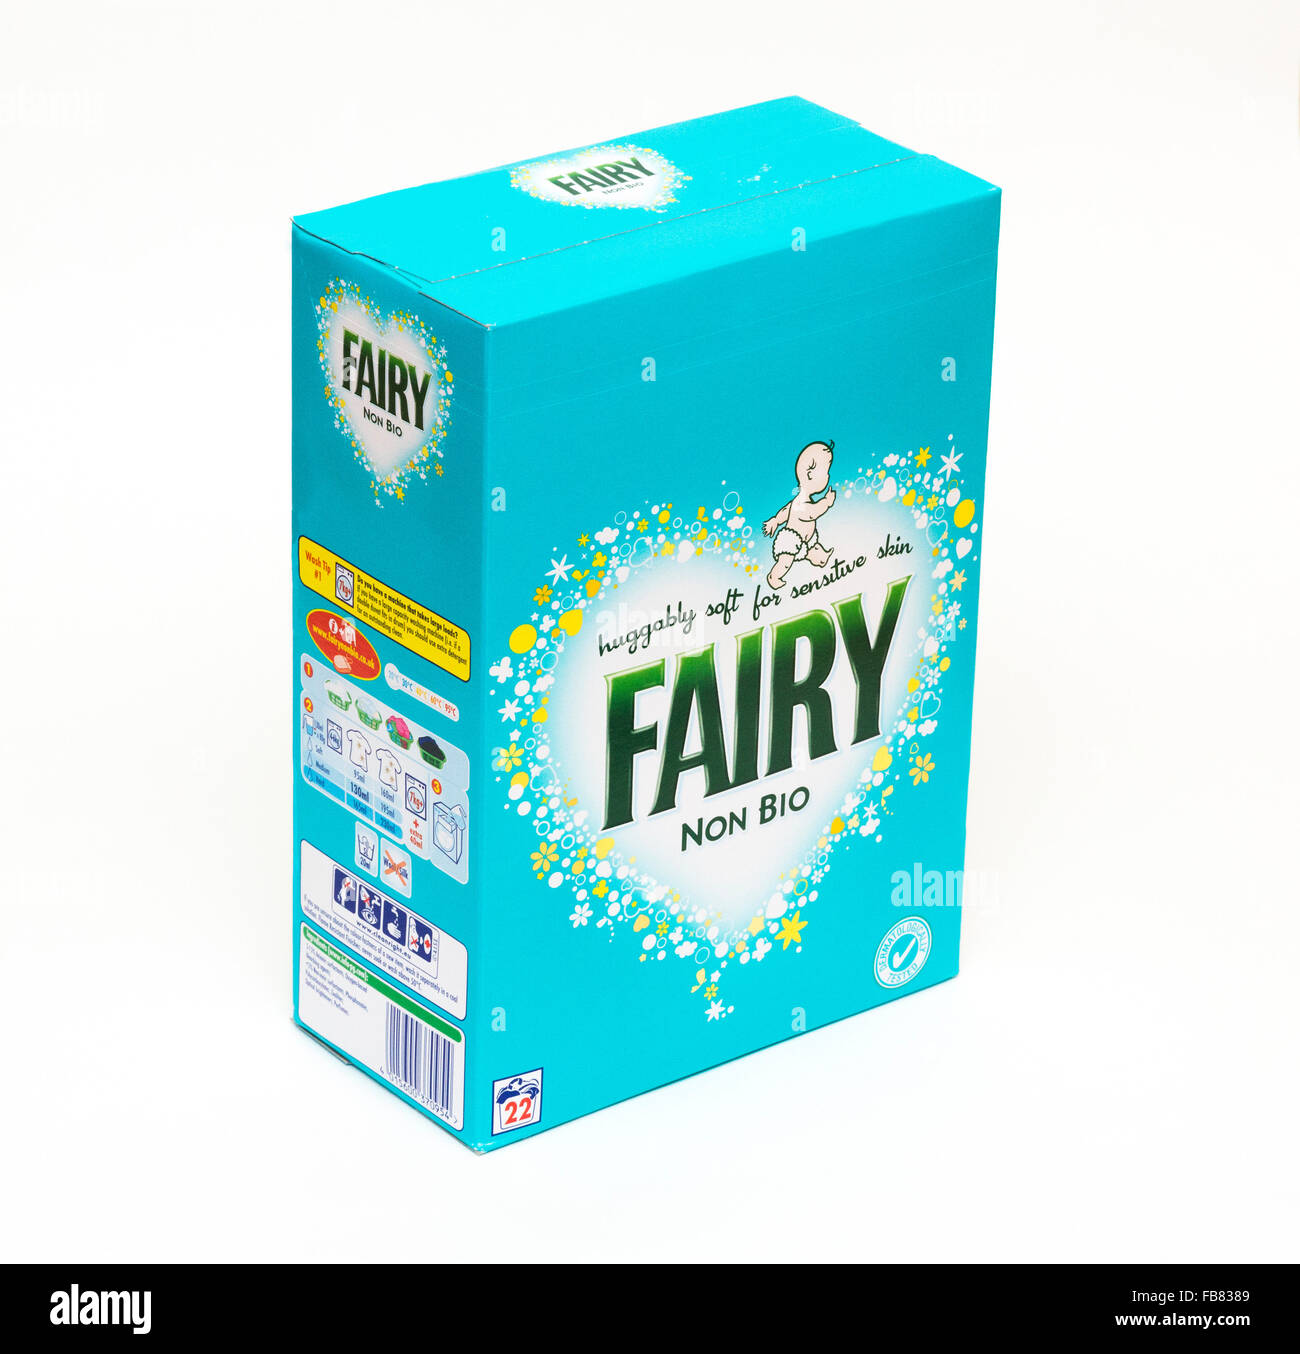 Fairy non bio detergente en polvo hecha por Procter and Gamble Foto de stock